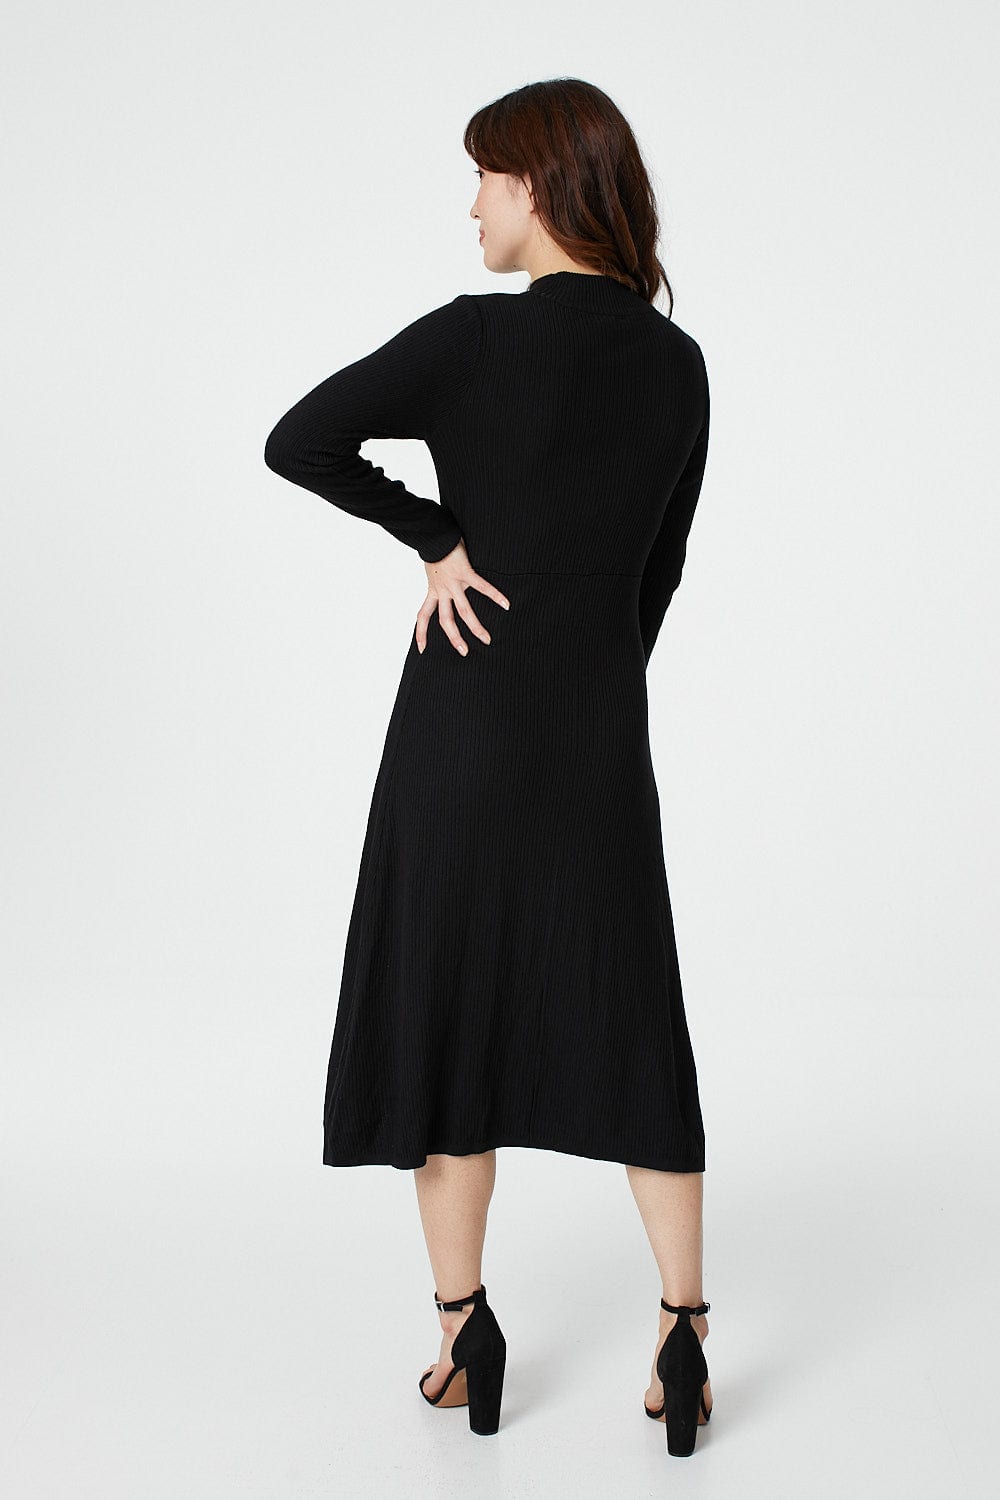 Black | Long Sleeve Knit Bodycon Midi Dress